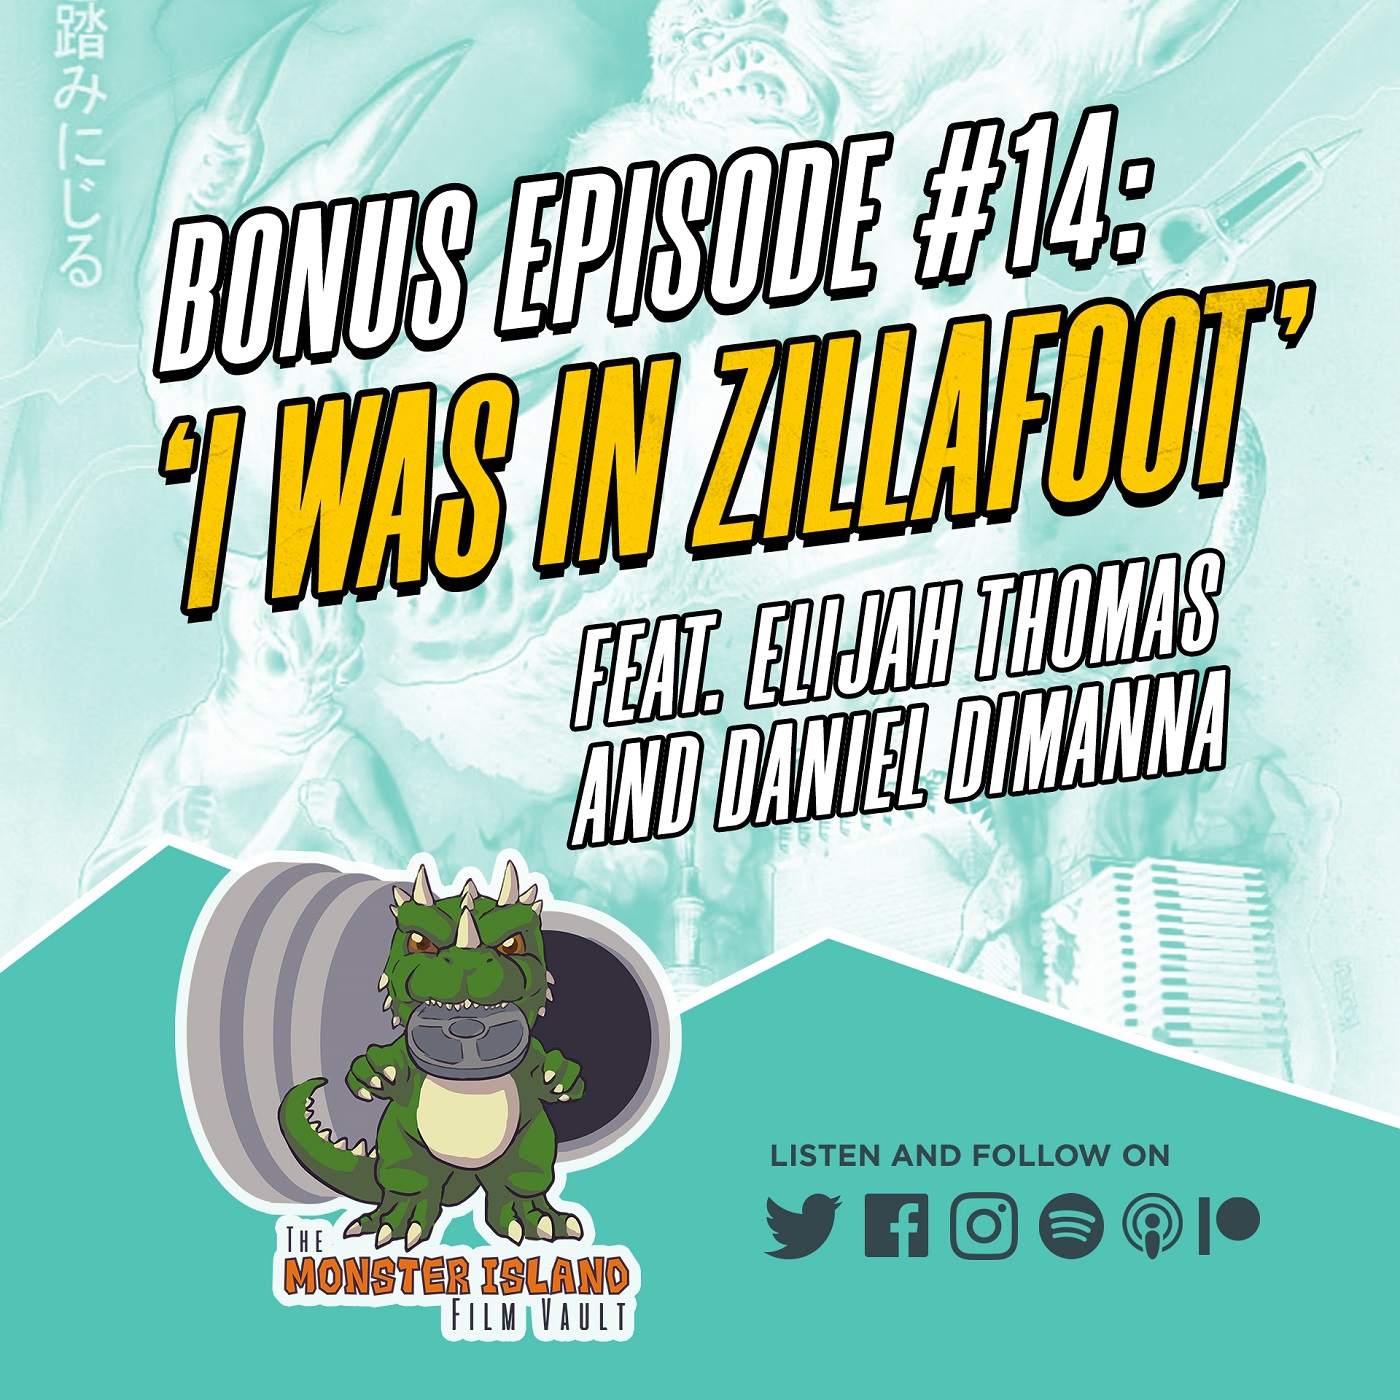 Bonus Episode #14: I was in ‘ZillaFoot’! | Ft. Daniel DiManna and Elijah Thomas